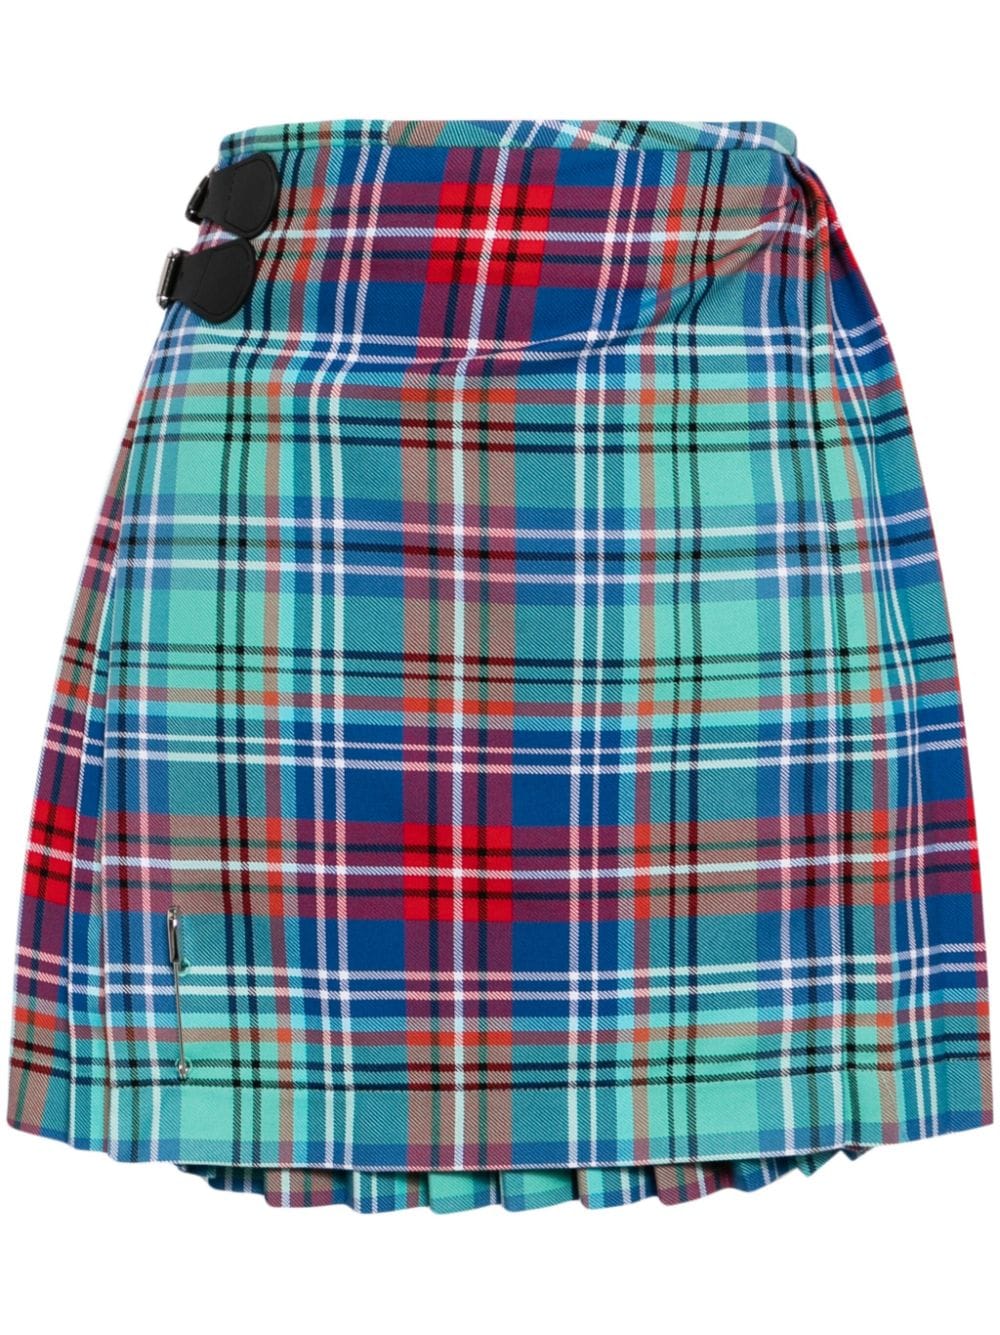 Charles Jeffrey Loverboy tartan-check cotton kilt skirt - Red von Charles Jeffrey Loverboy